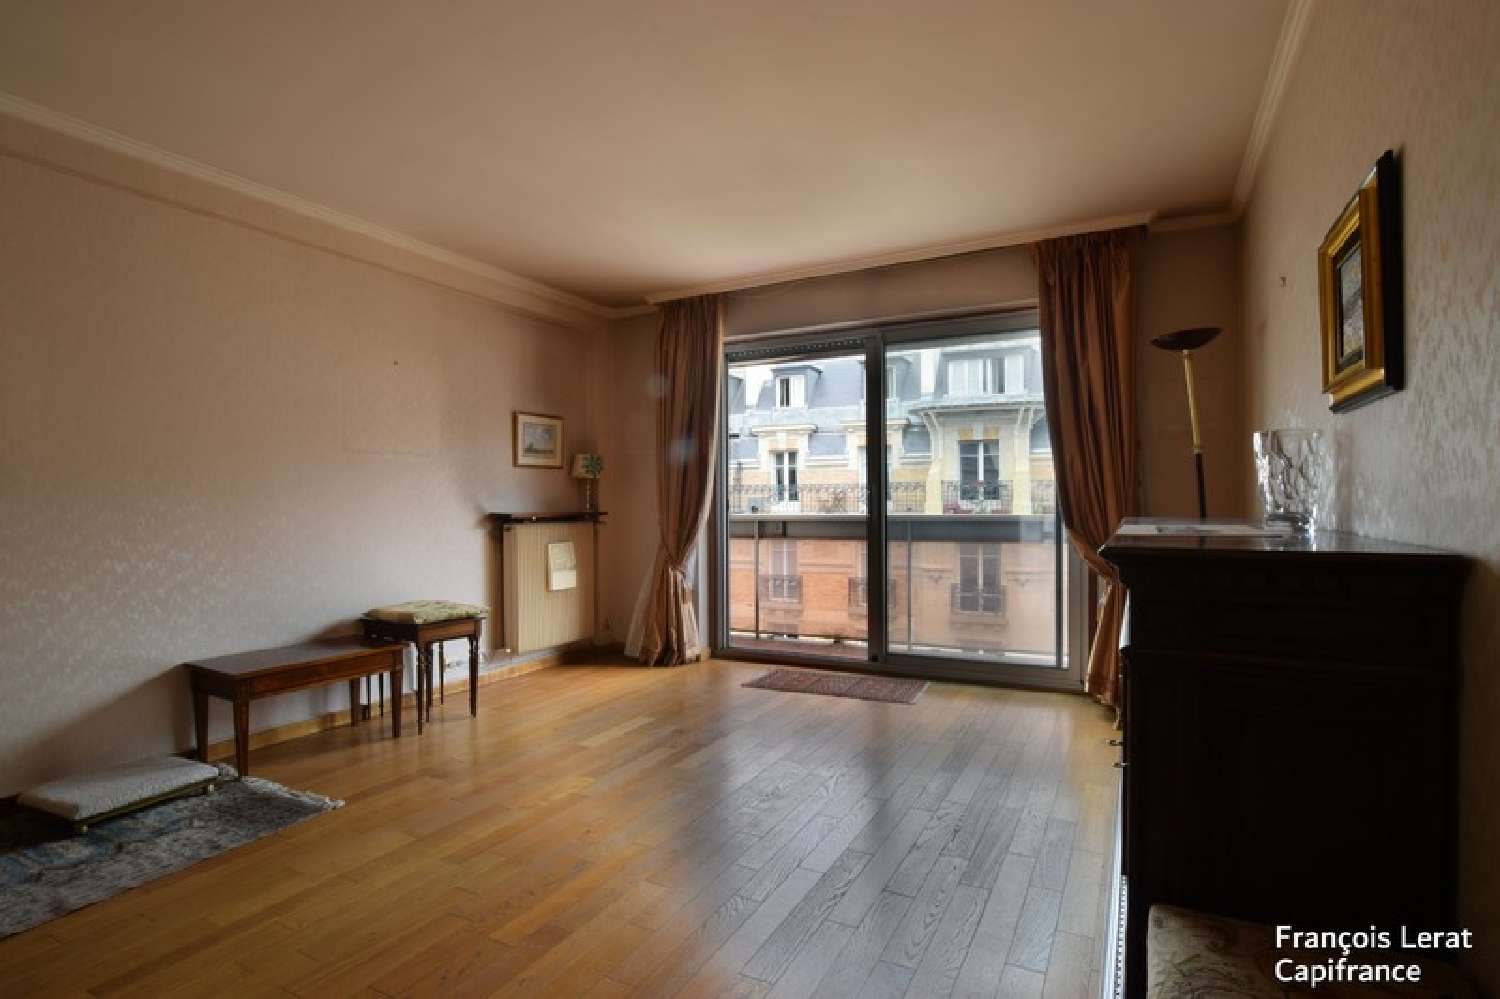  te koop appartement Paris 15e Arrondissement Parijs (Seine) 3